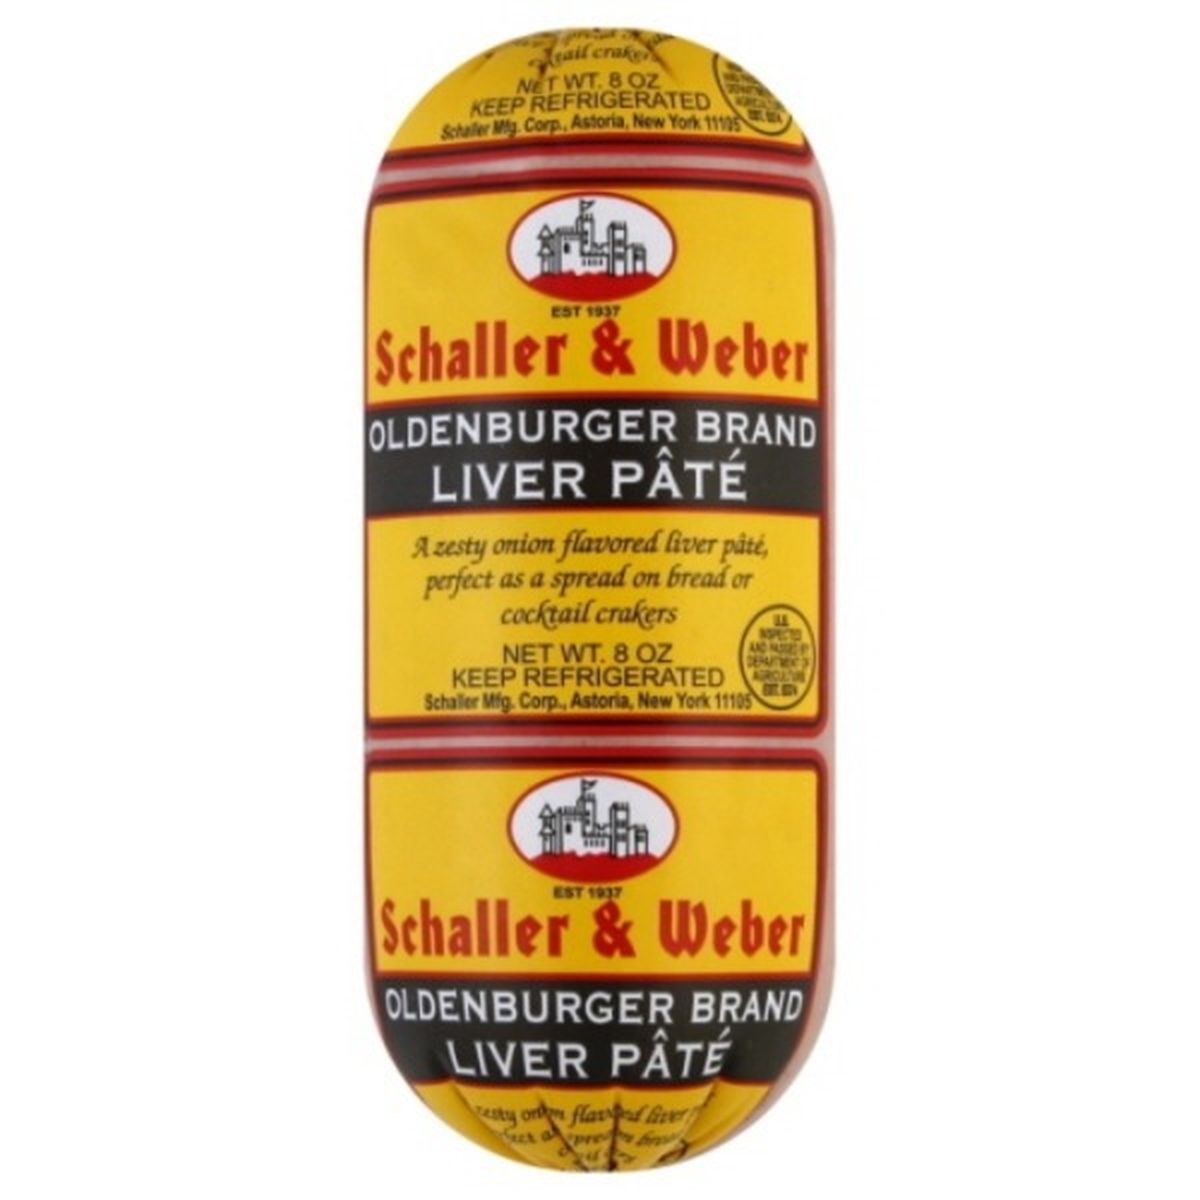 Calories in Schaller & Weber Liver Pate, Oldenburger Brand